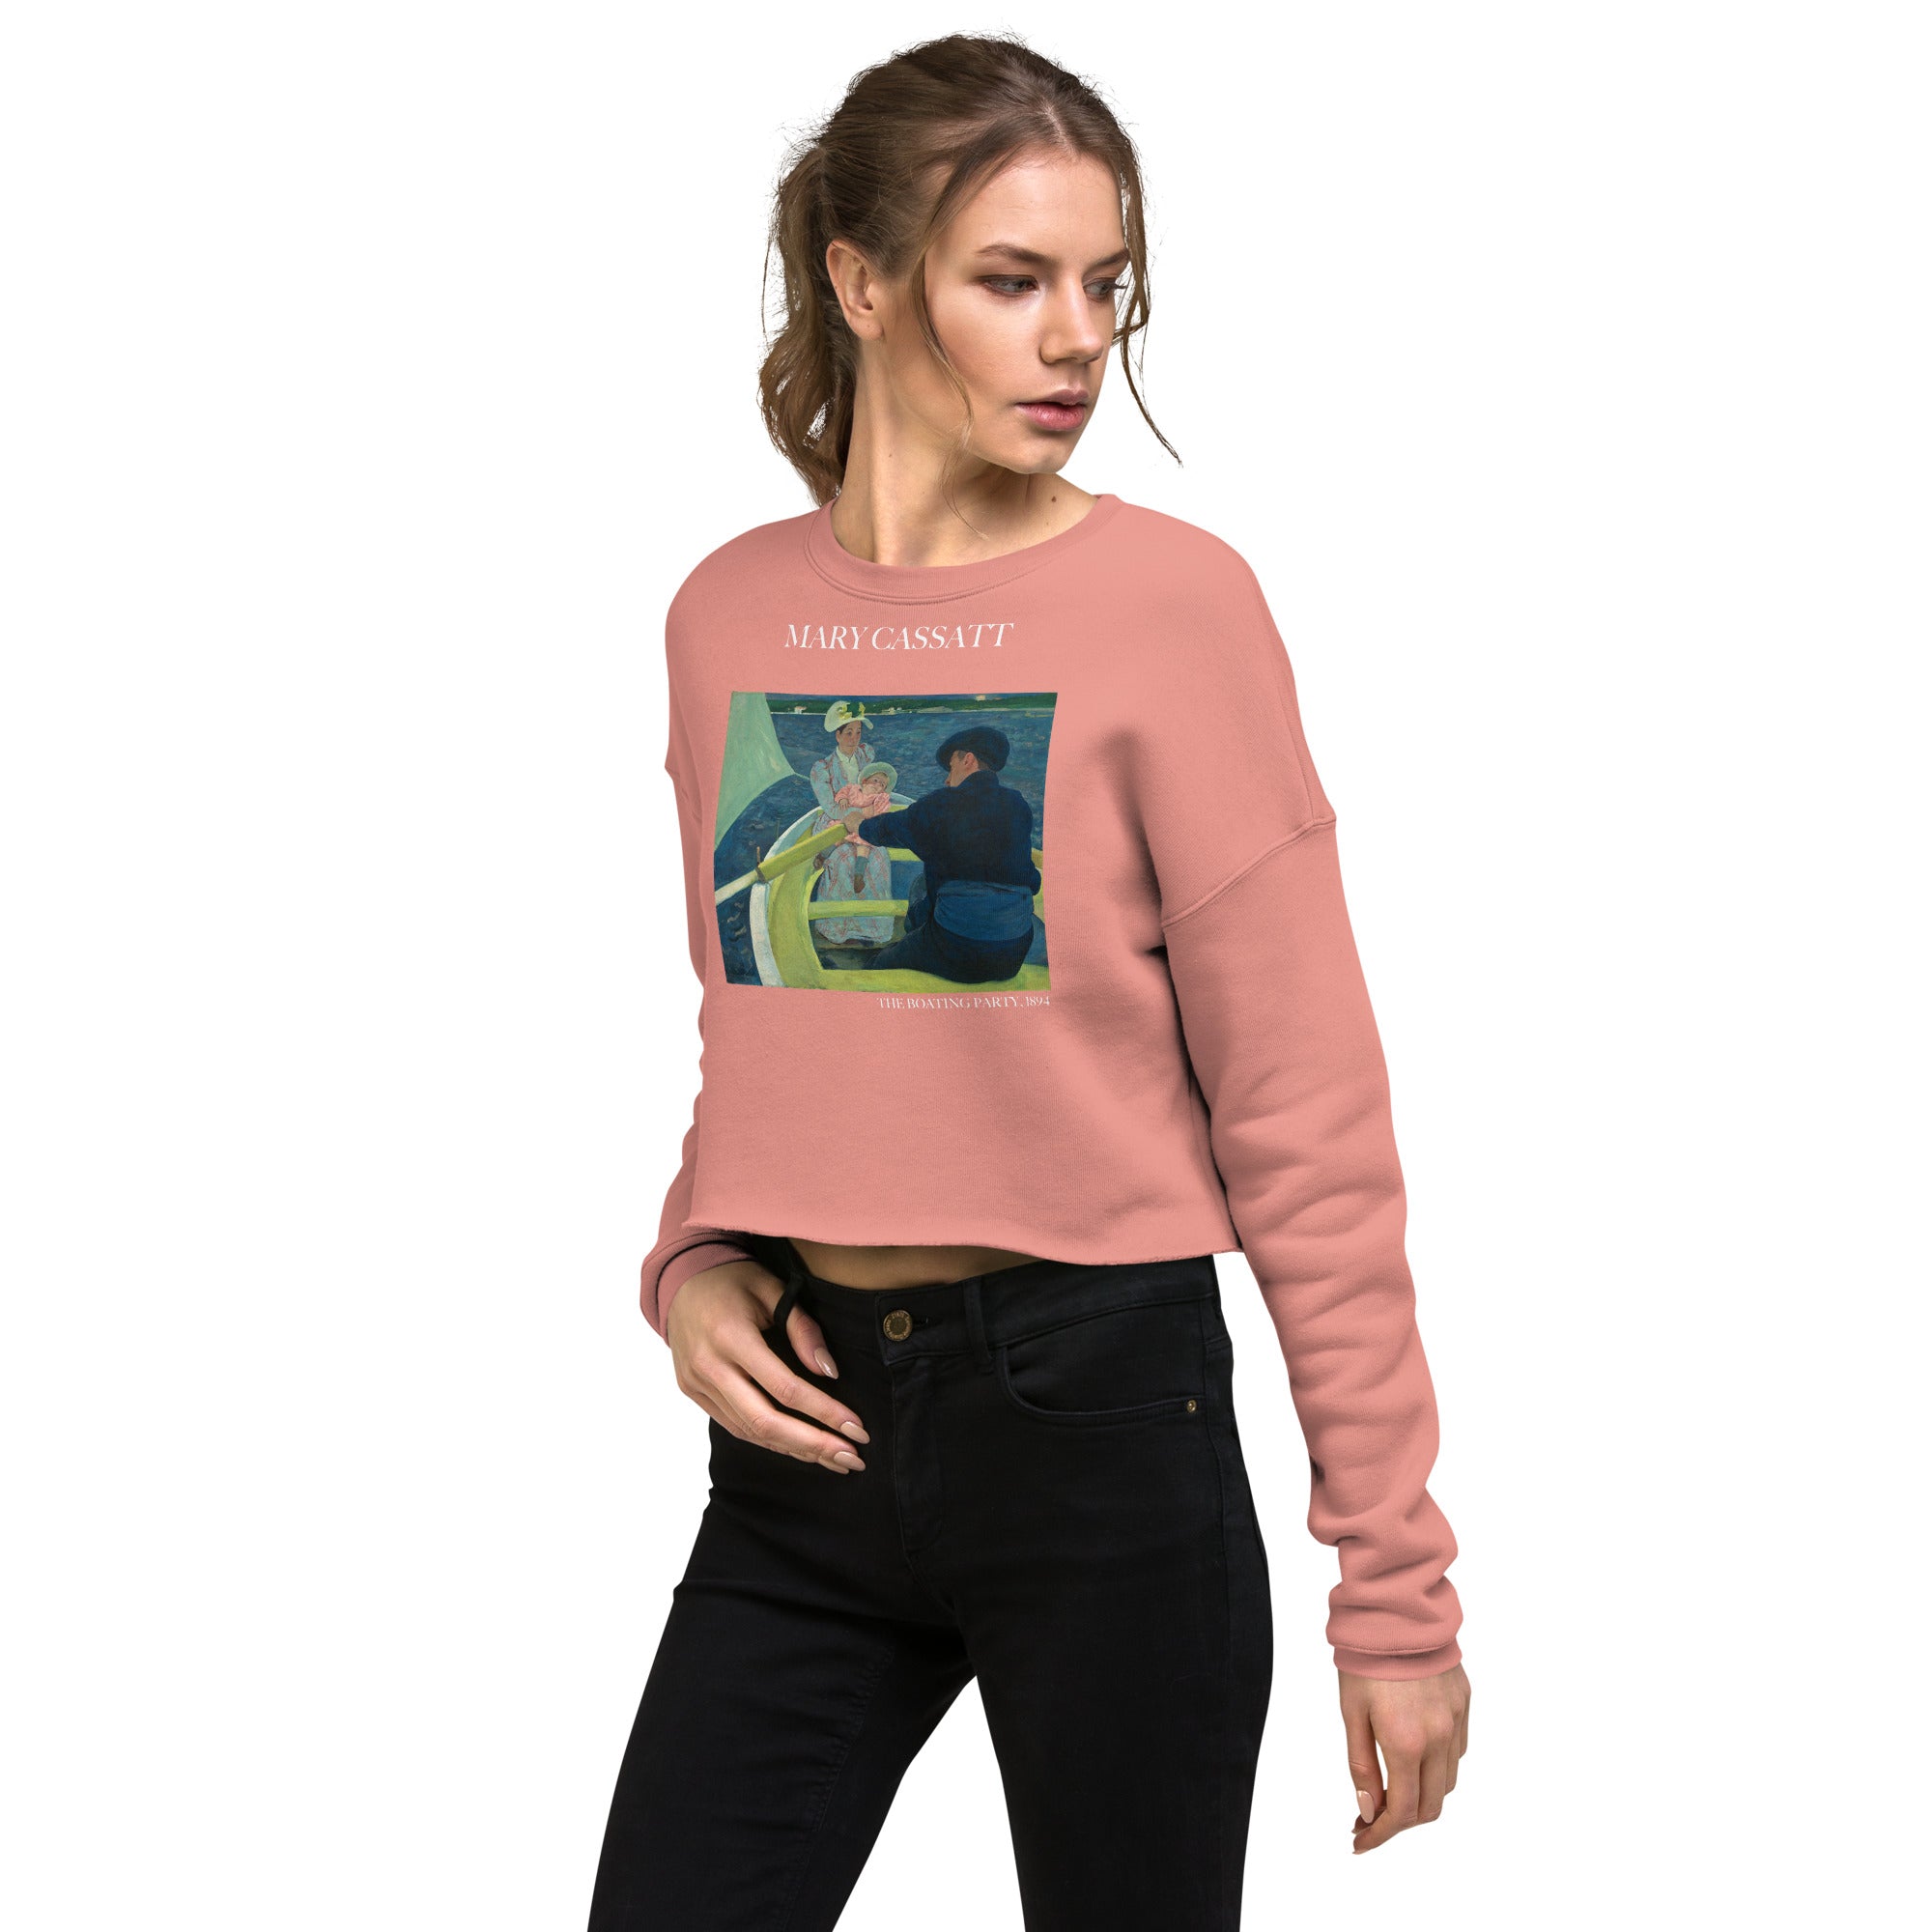 Mary Cassatt 'The Boating Party' Famous Painting Cropped Sweatshirt | Premium Art Cropped Sweatshirt